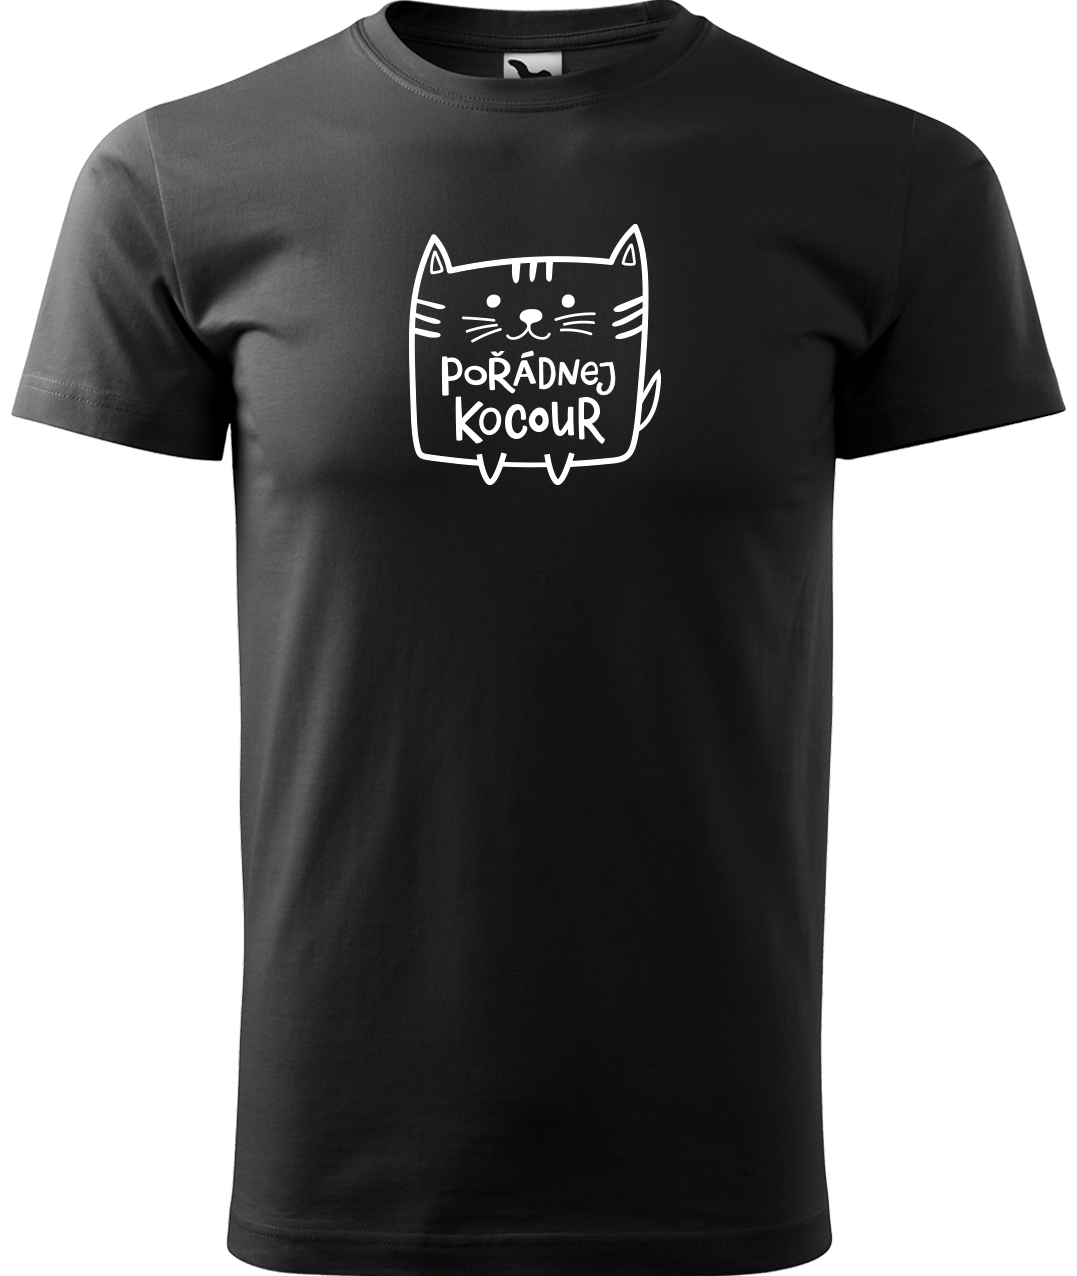 Pánské tričko s kočkou - Pořádnej kocour Velikost: S, Barva: Černá (01)